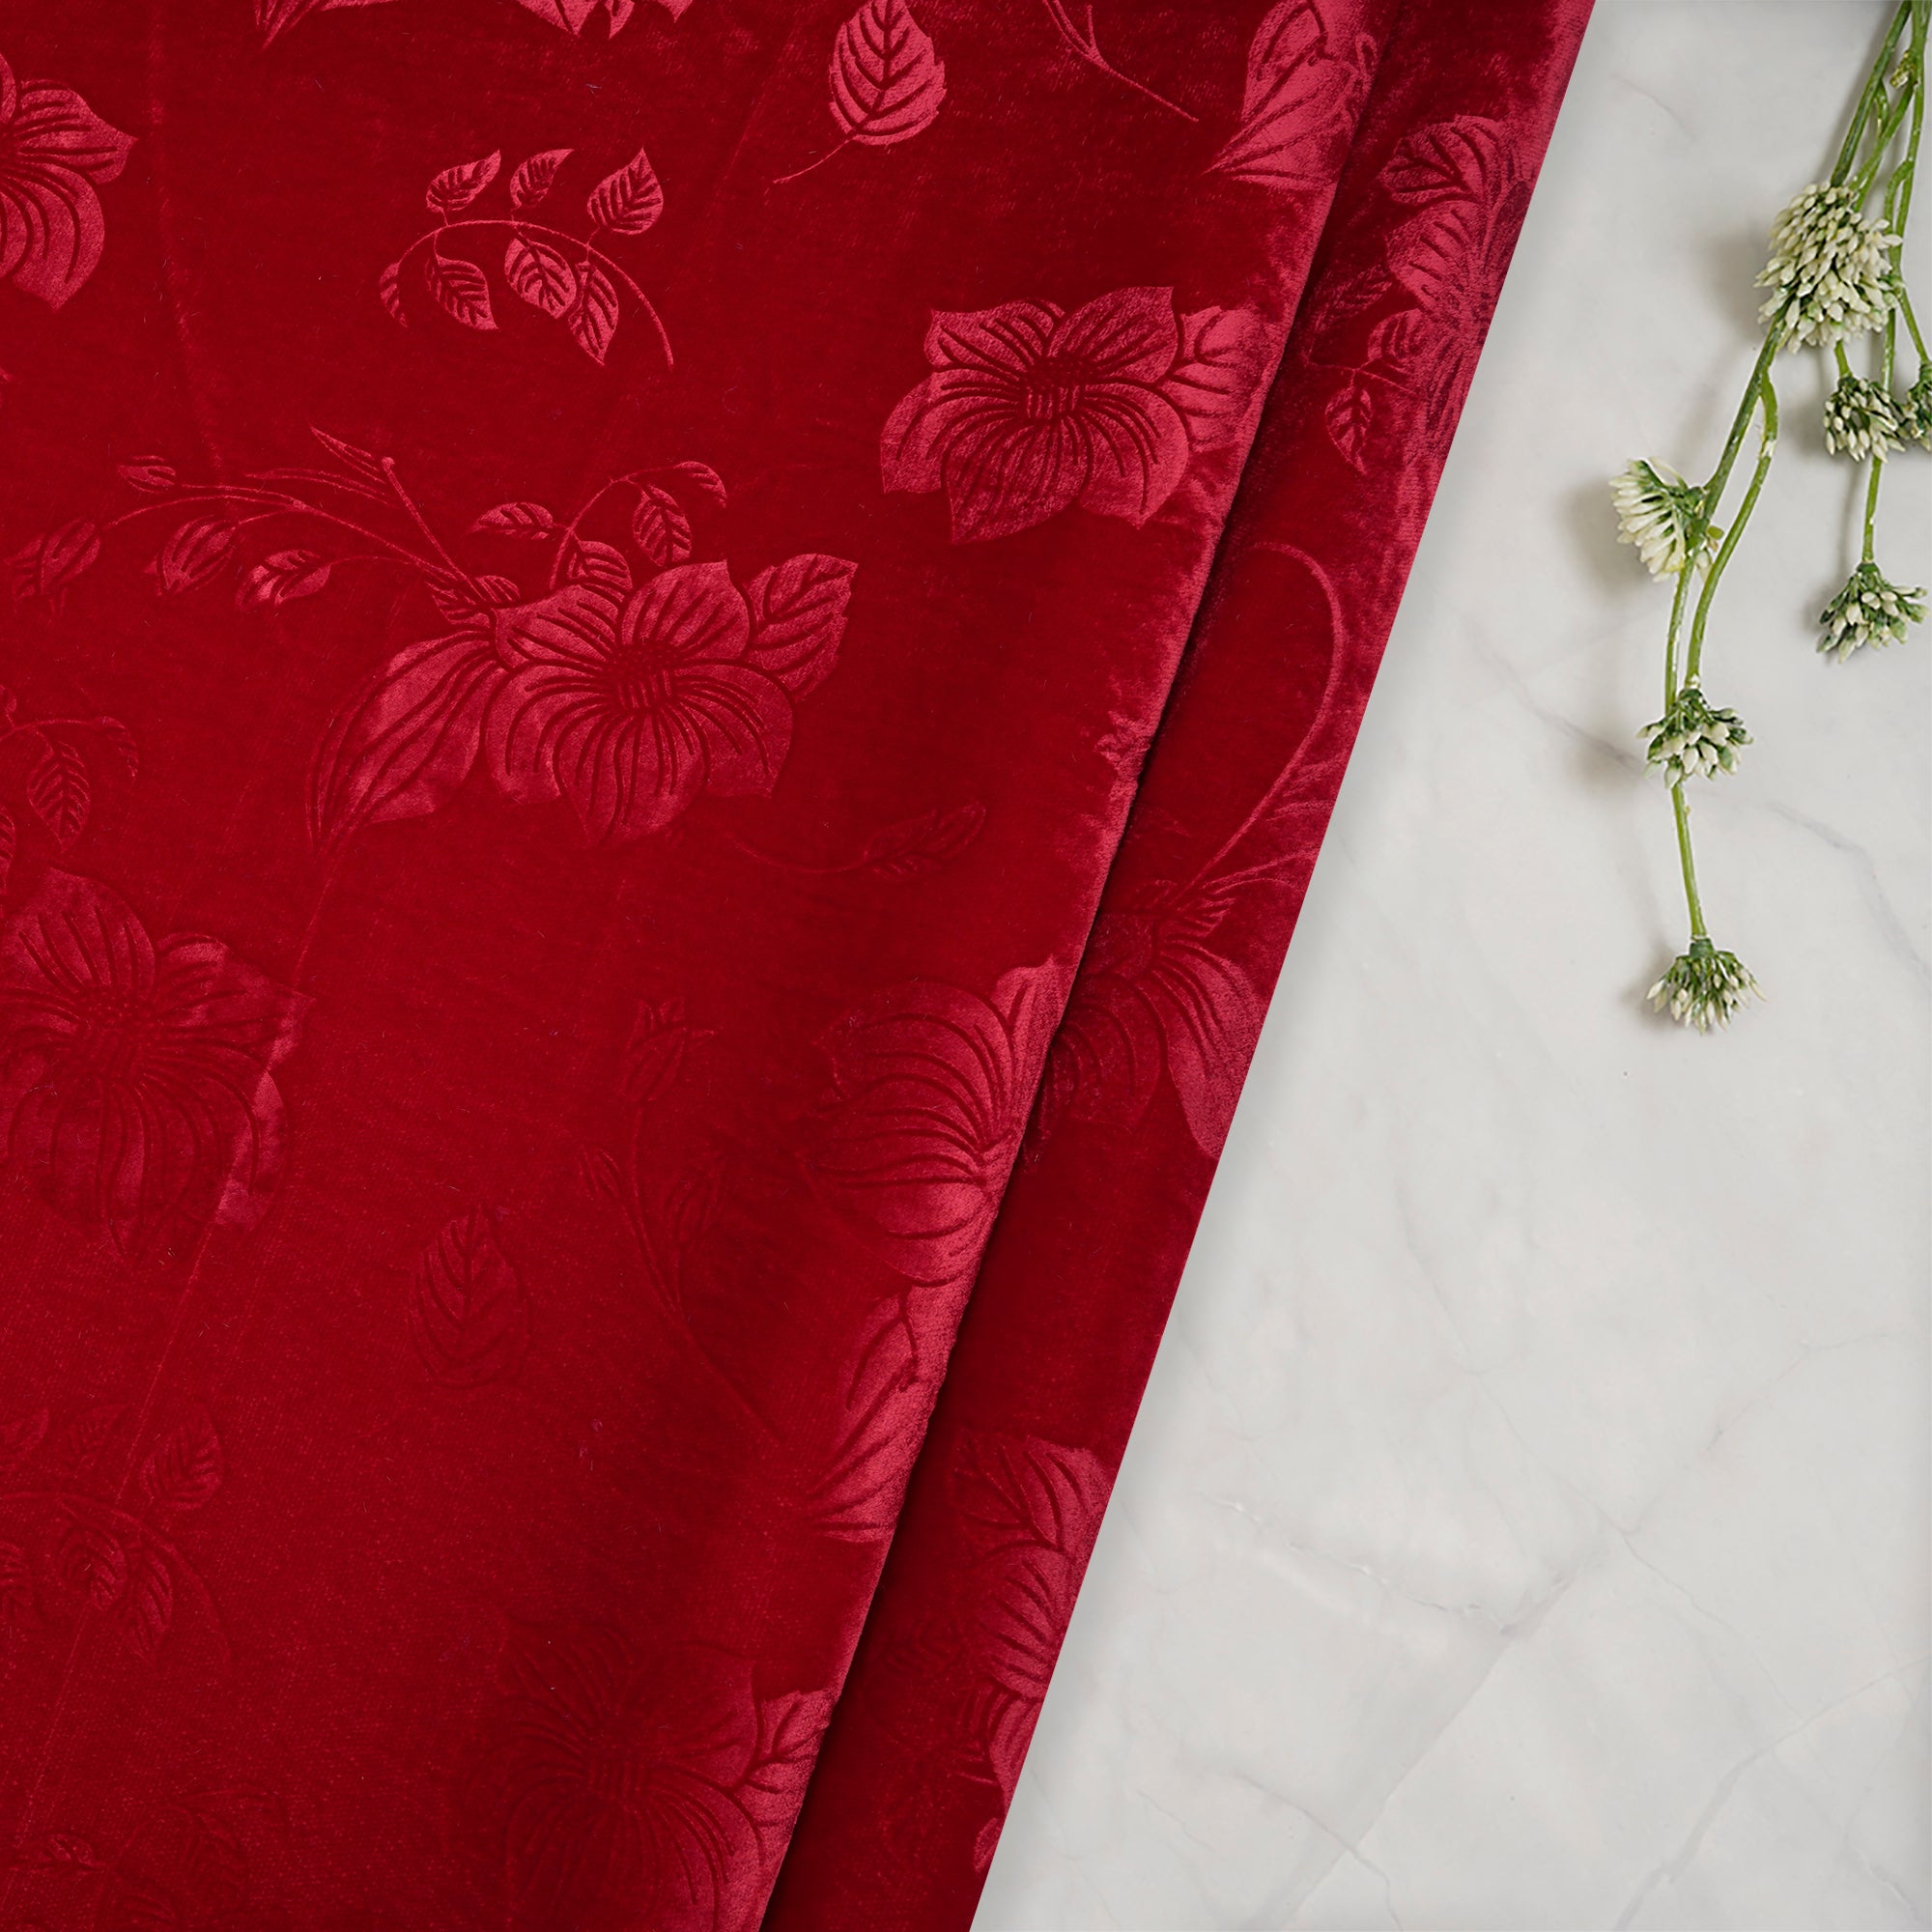 Viscose Rayon - Buy Printed Viscose Rayon Fabric Online in India @ Rs.299